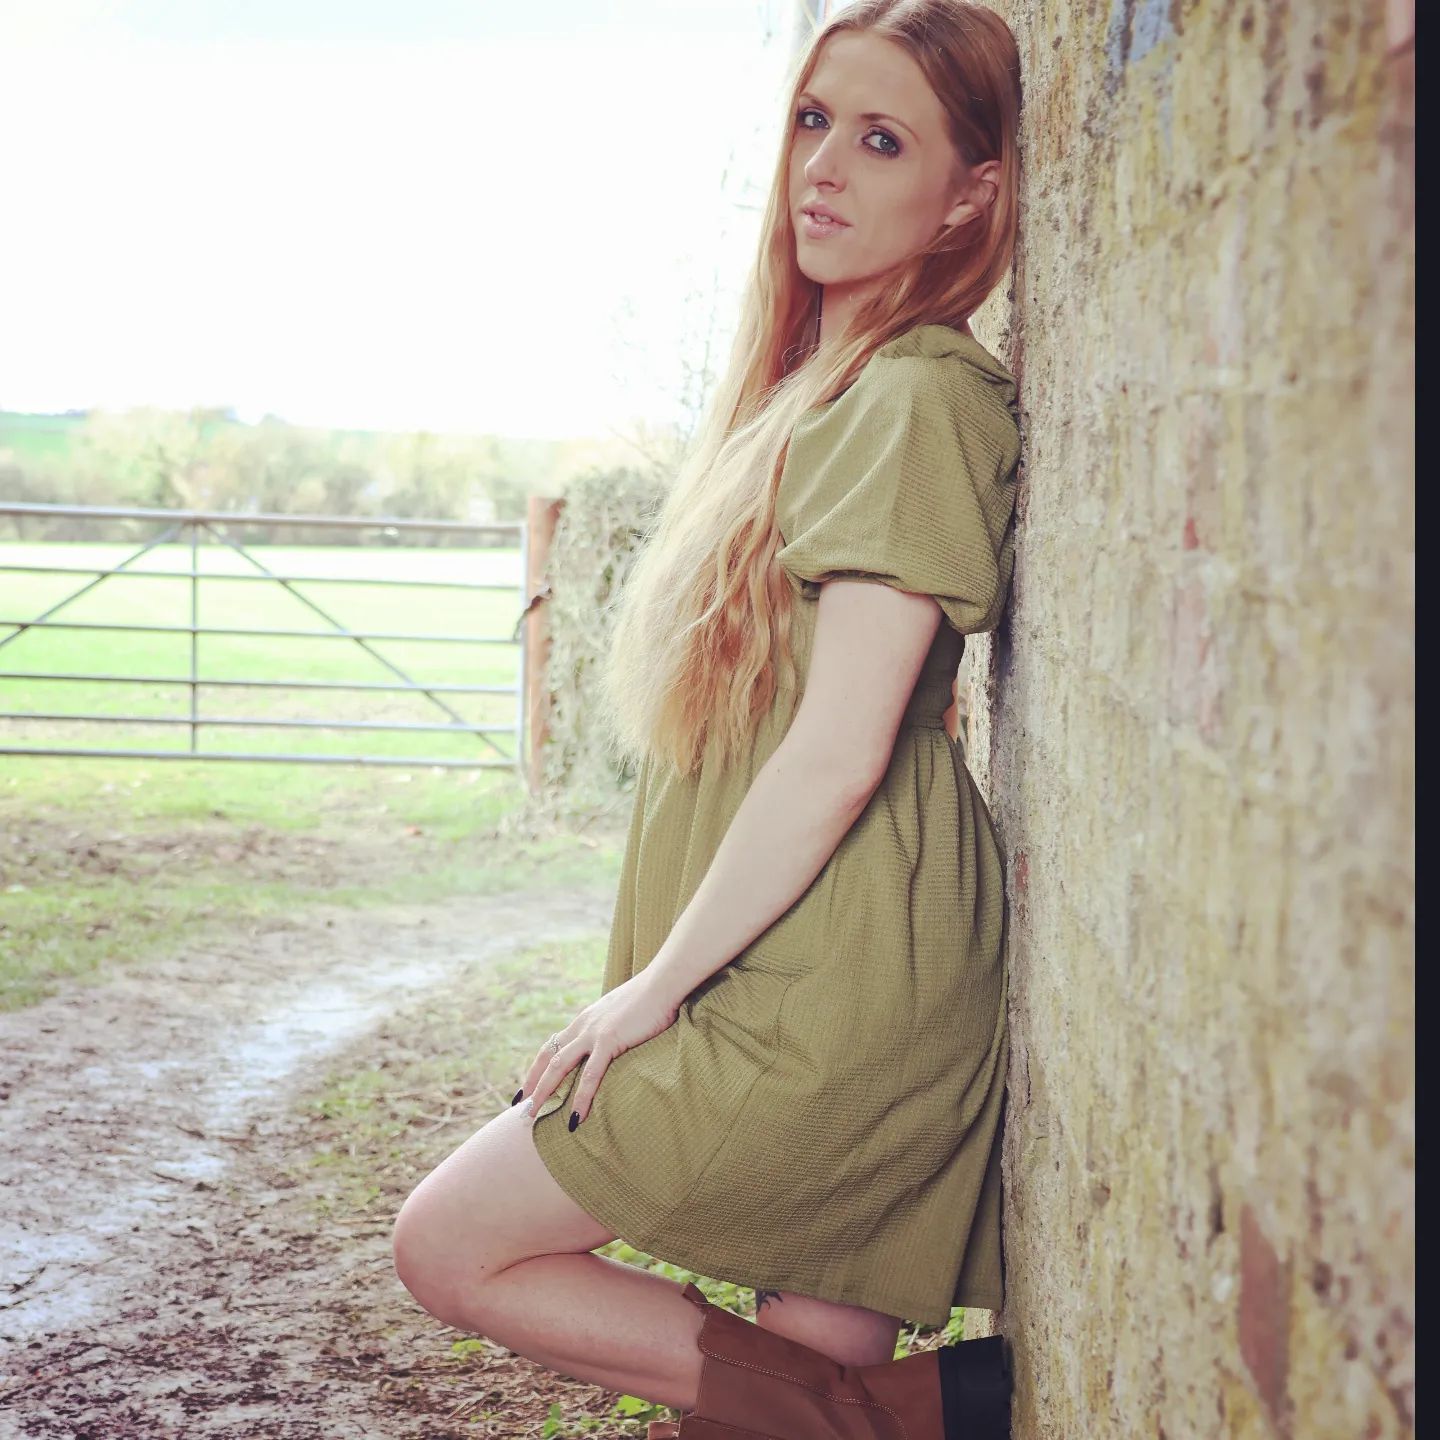 .
. 
#Countrygirl #photography #green #dress #boots #railway #bridge #happy #life